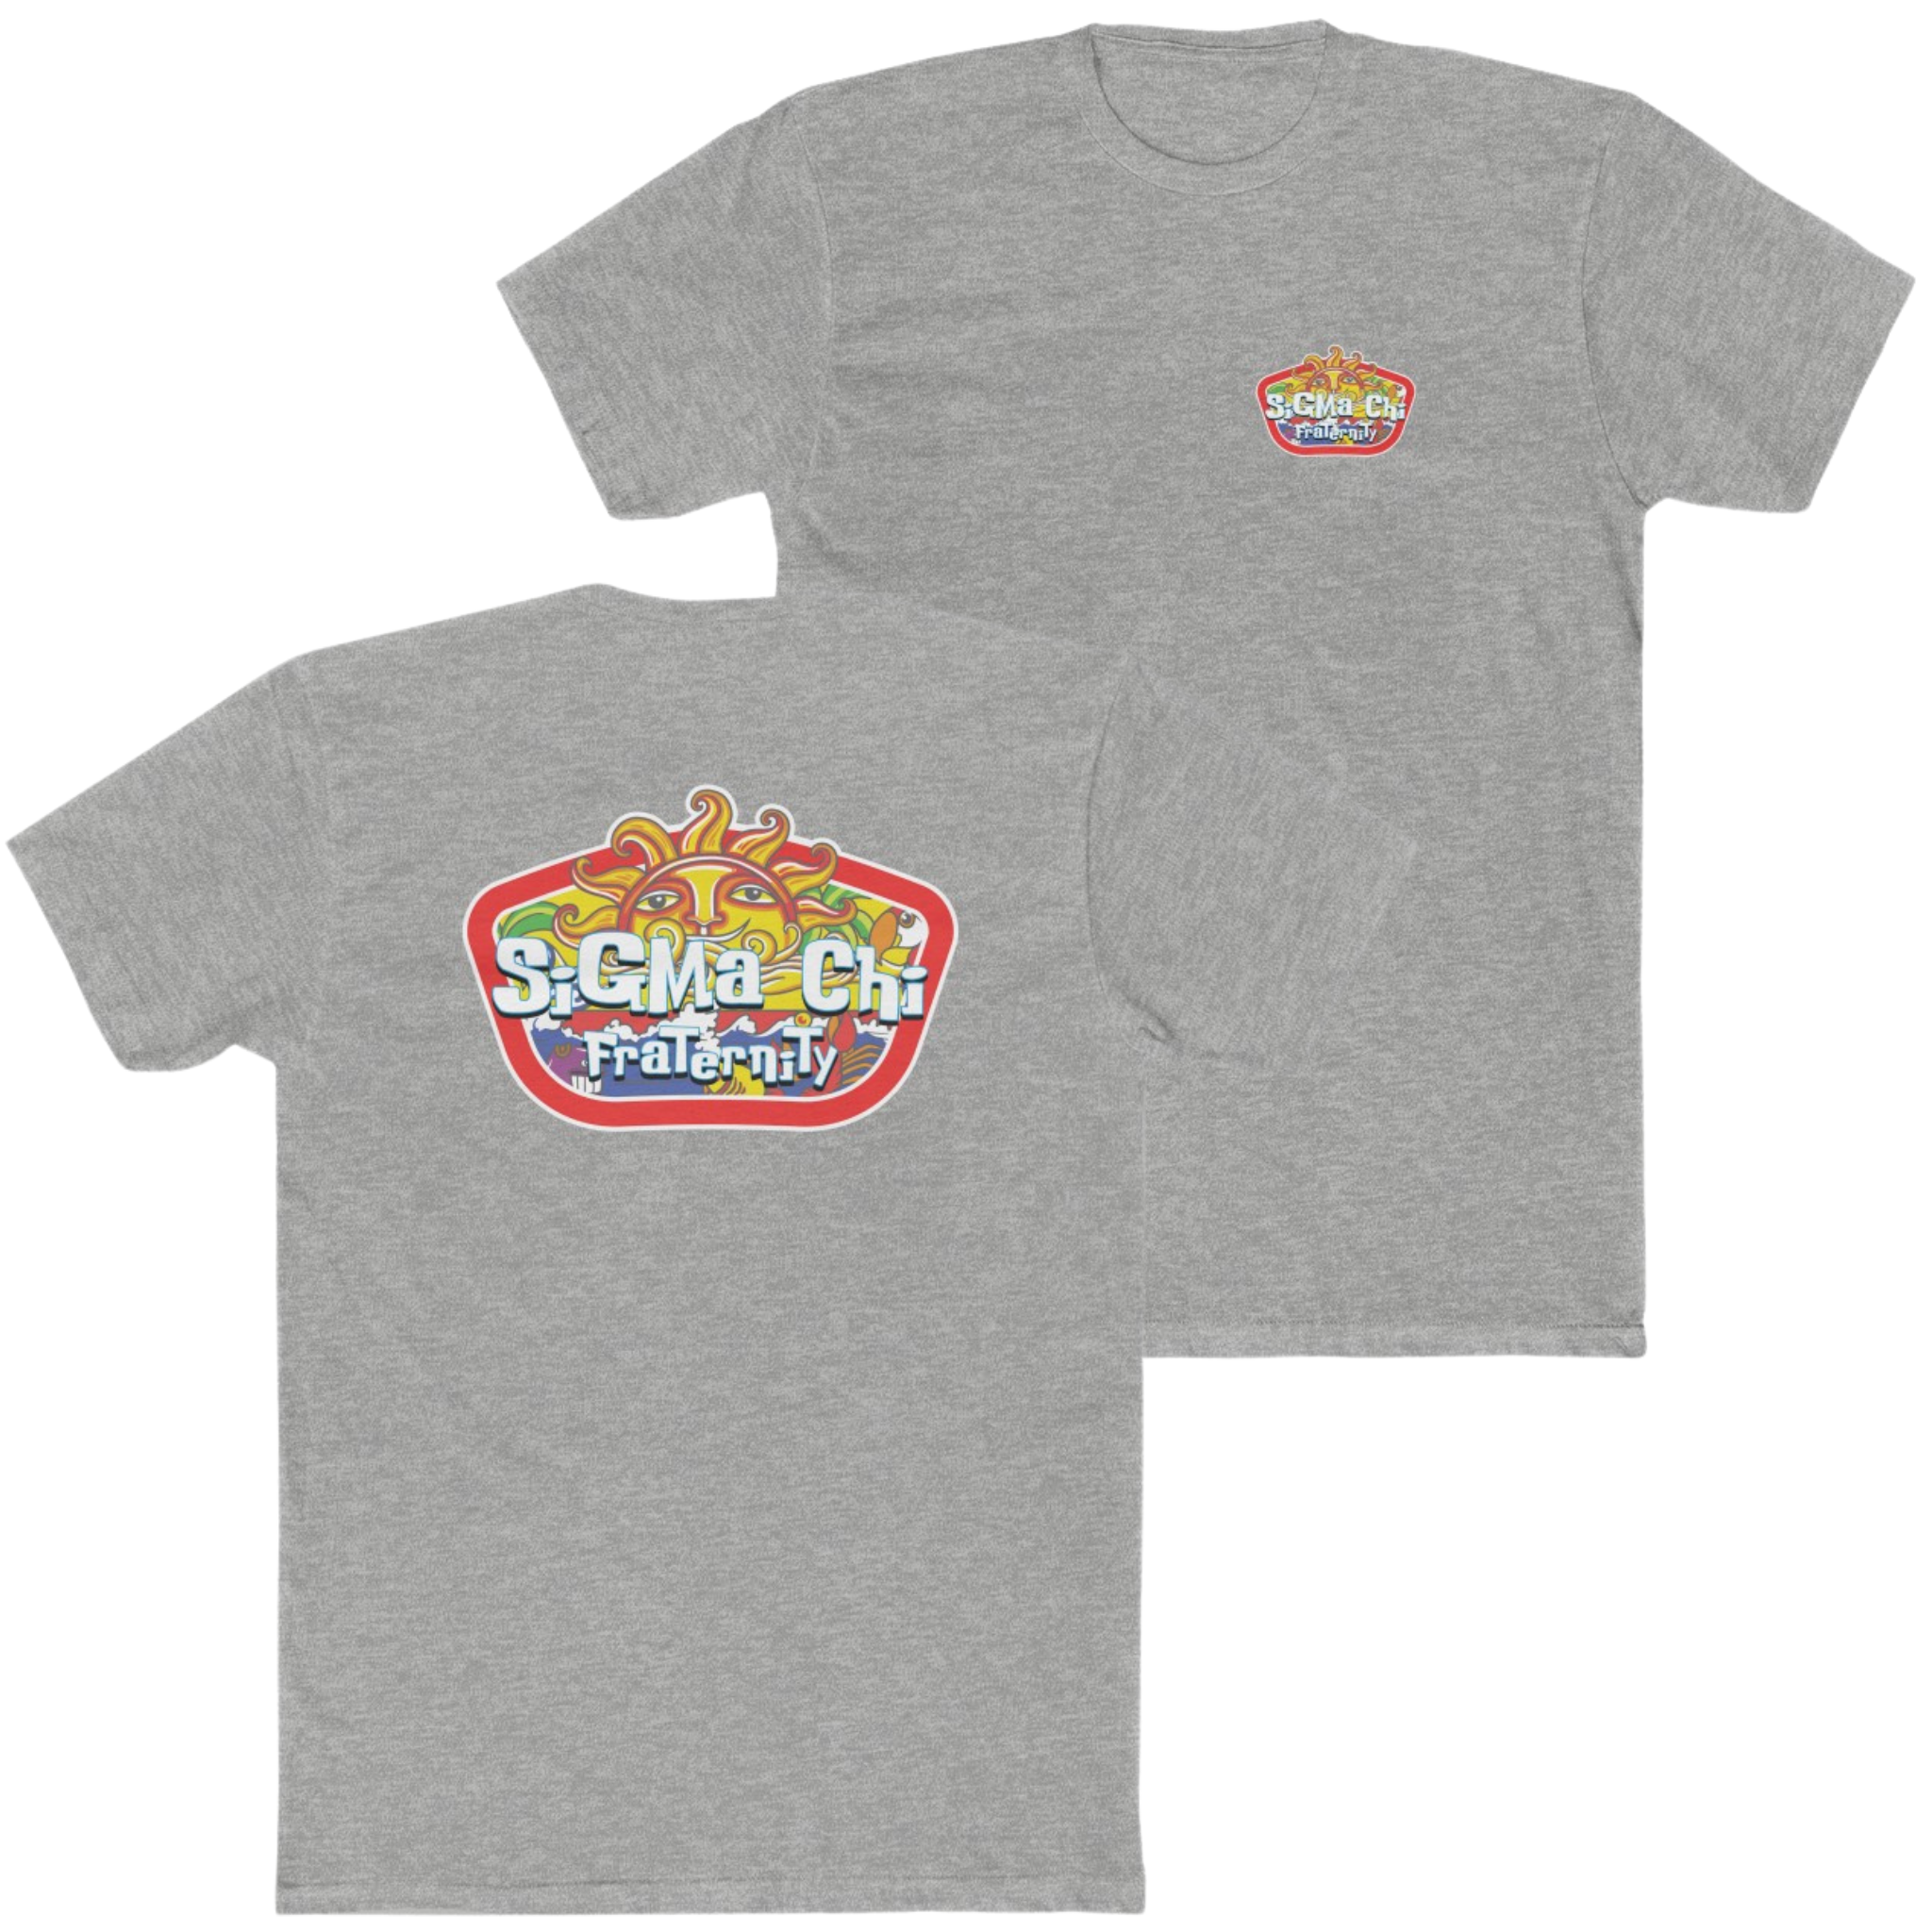 Sigma Chi Graphic T-Shirt